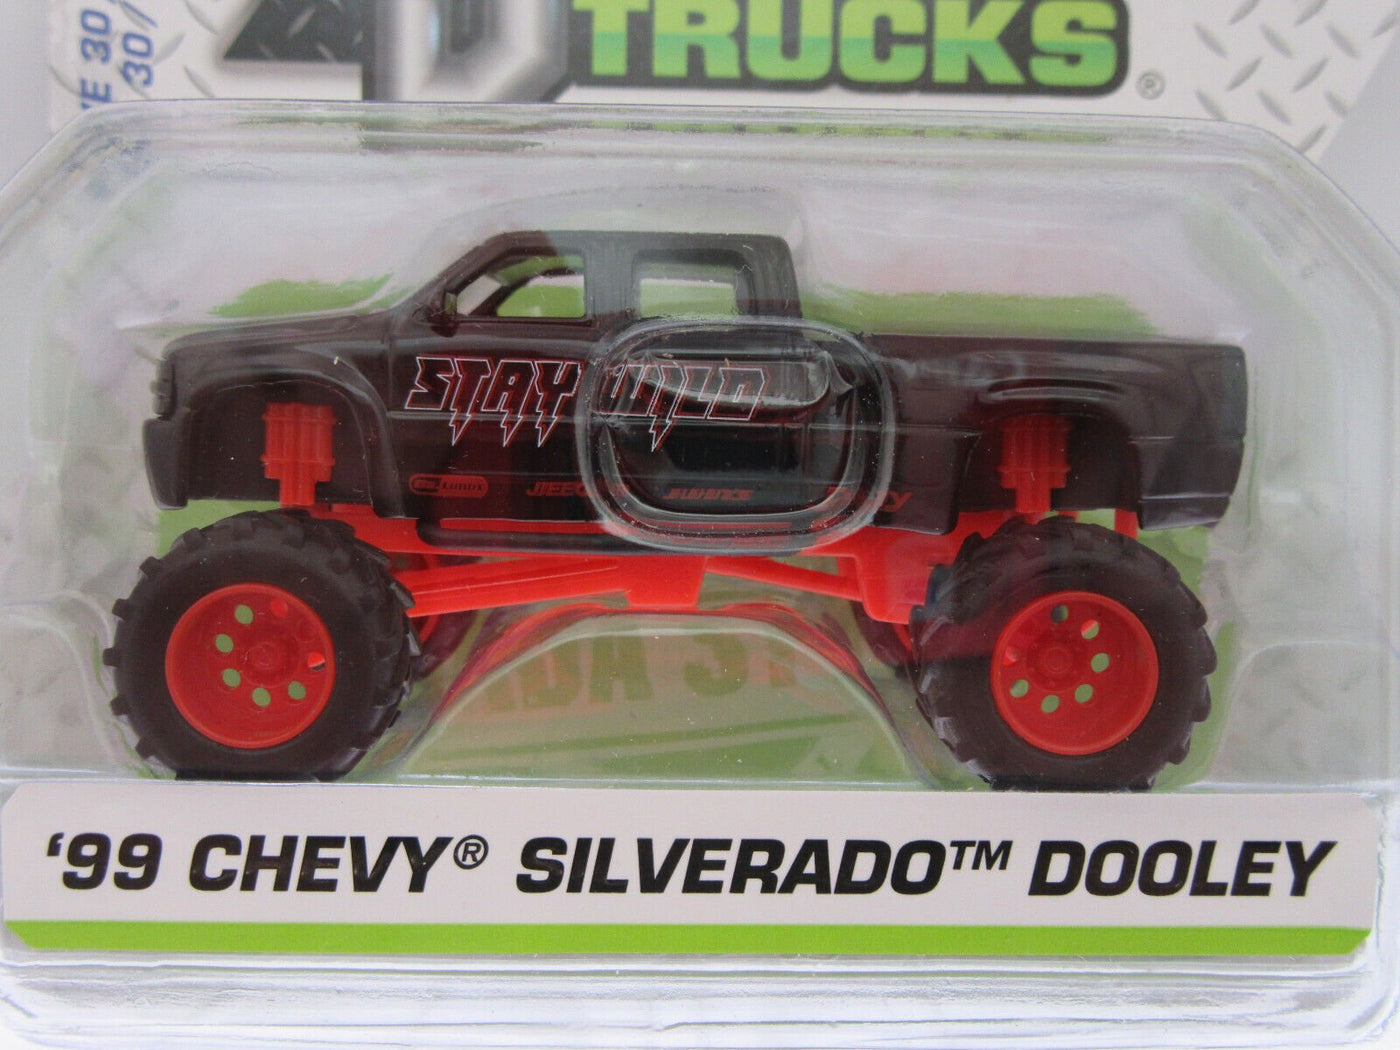 1999 Chevrolet Silverado Dually ~ Die Cast Metal ~ 1:57 Scale ~ Just Trucks